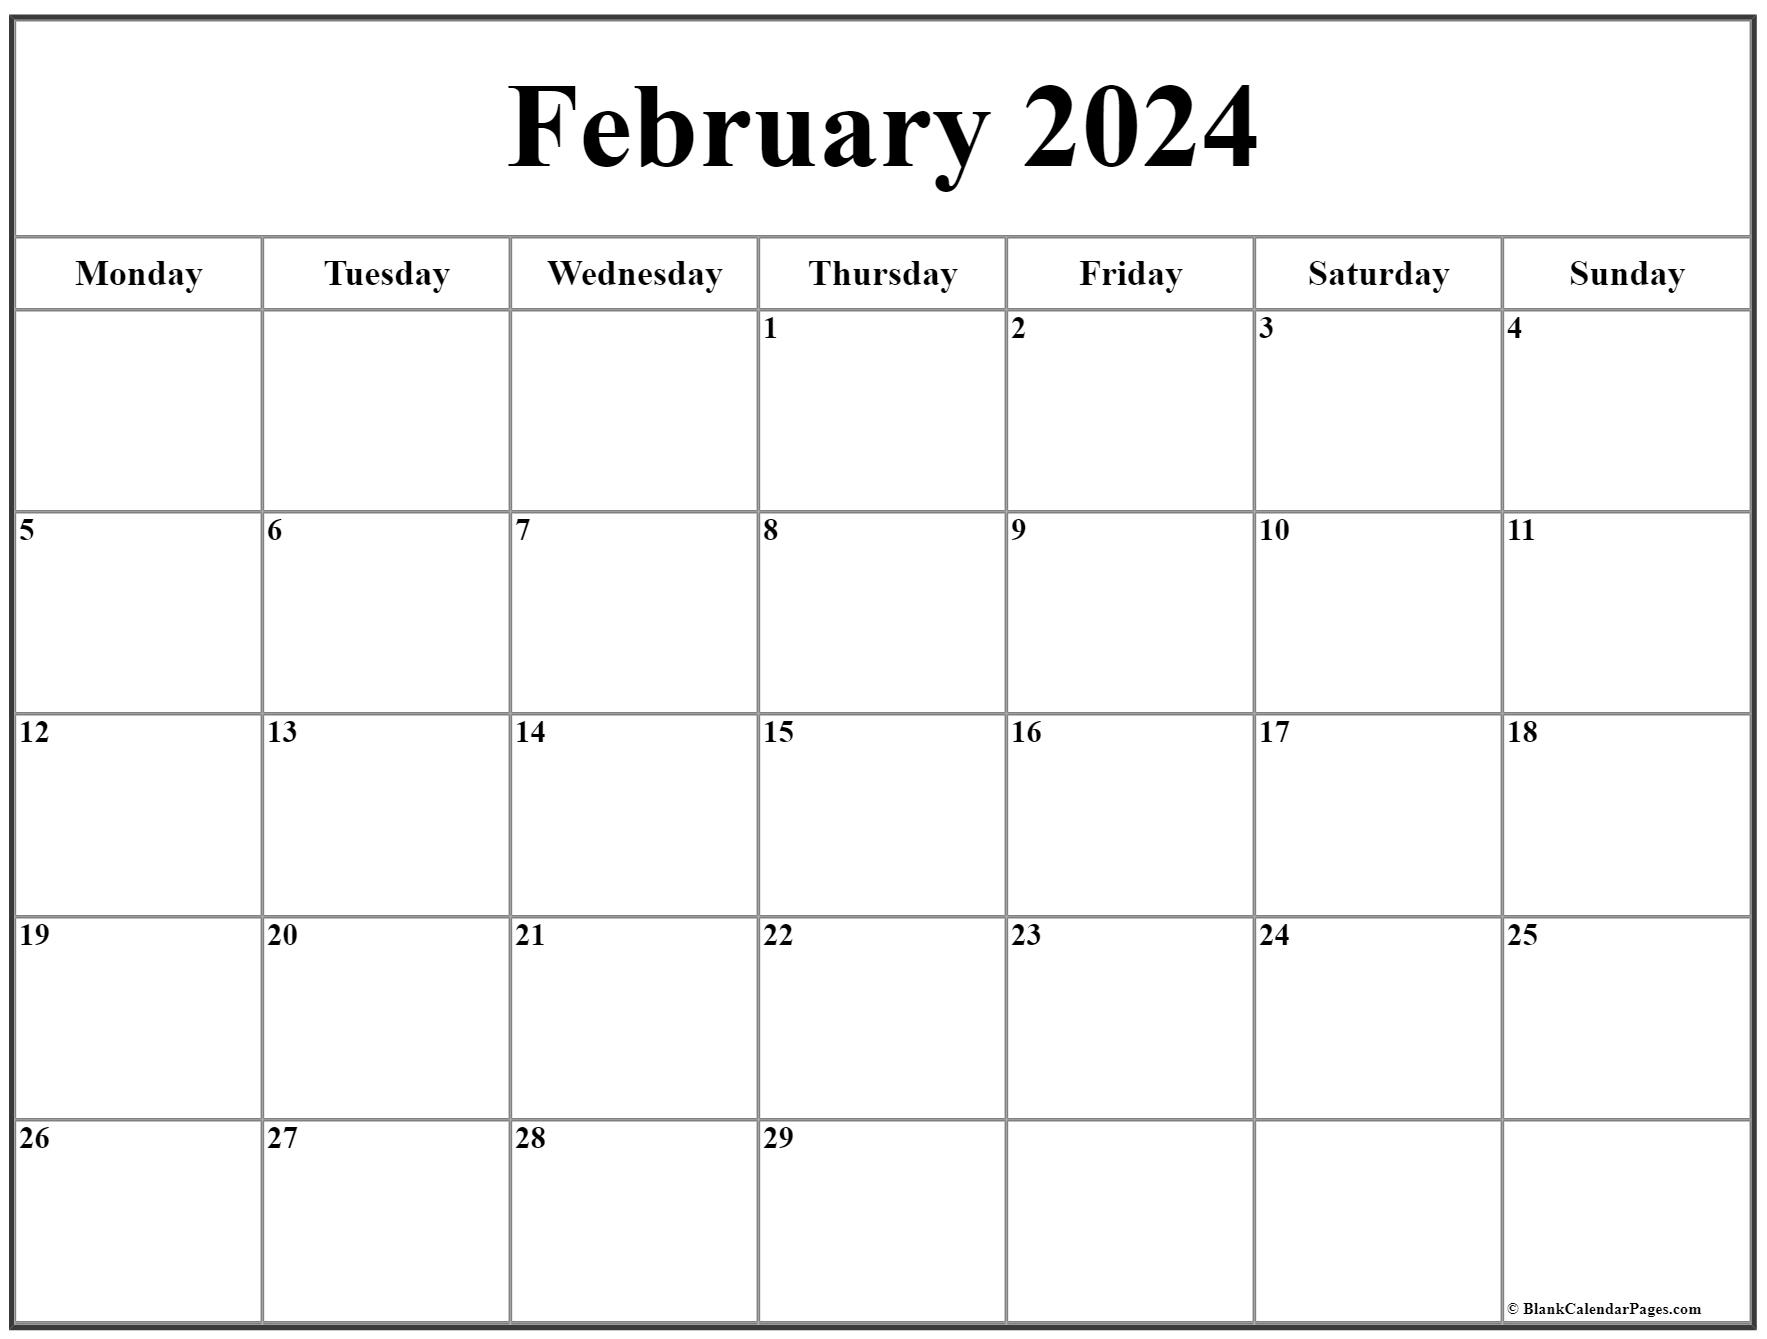 february-2023-monday-calendar-monday-to-sunday